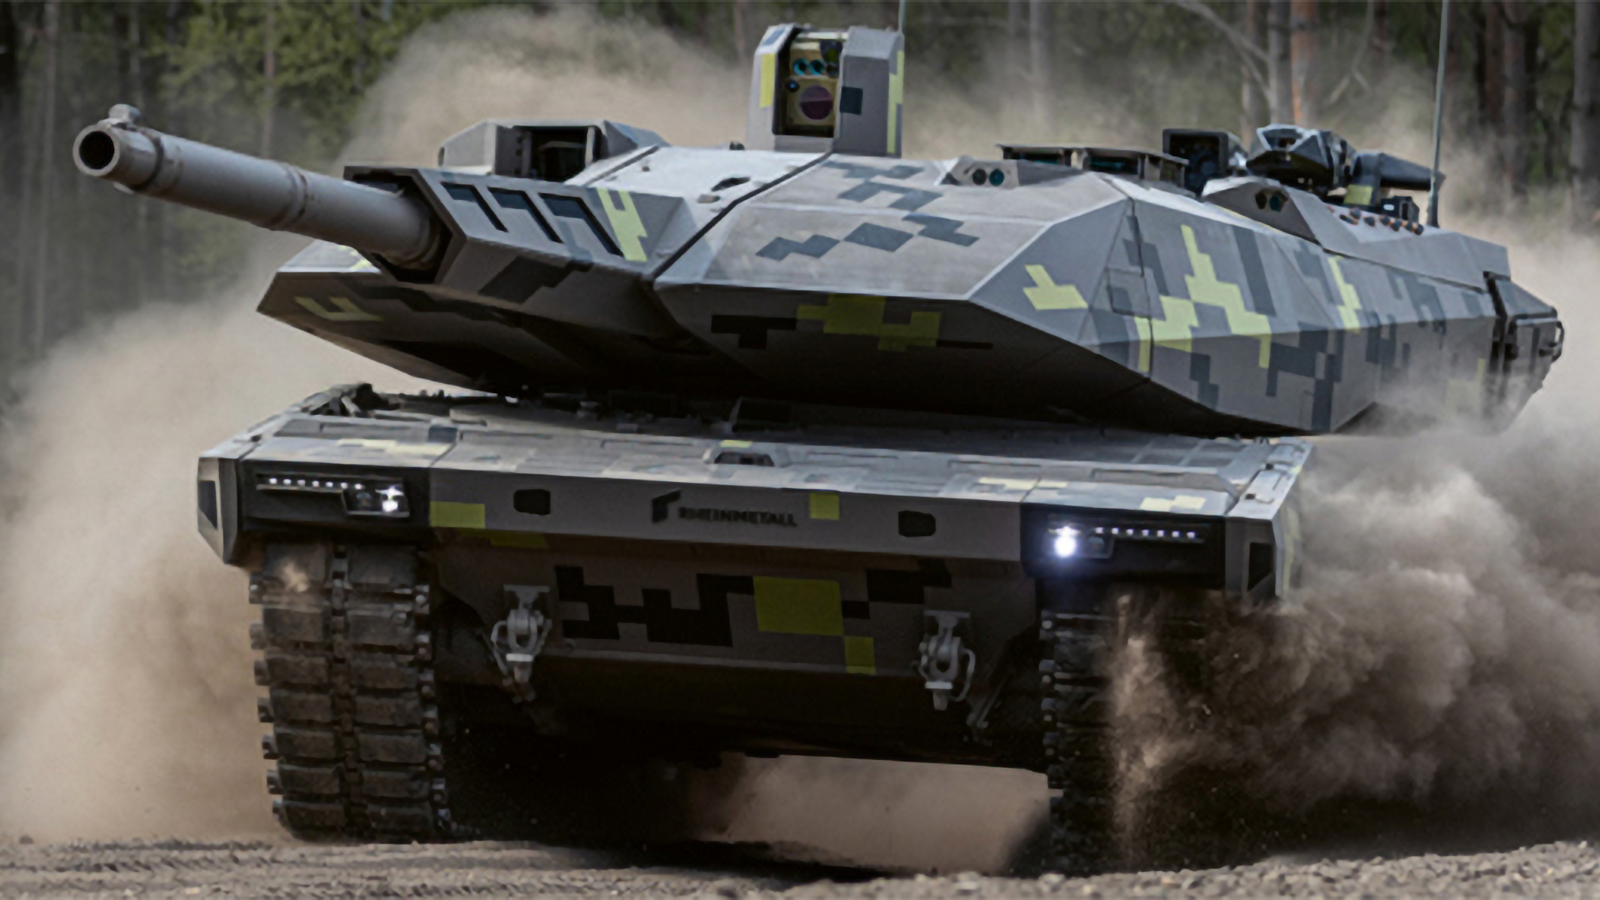 ginder balkon kroon Rheinmetall unveils new tank design: KF51 Panther - Breaking Defense